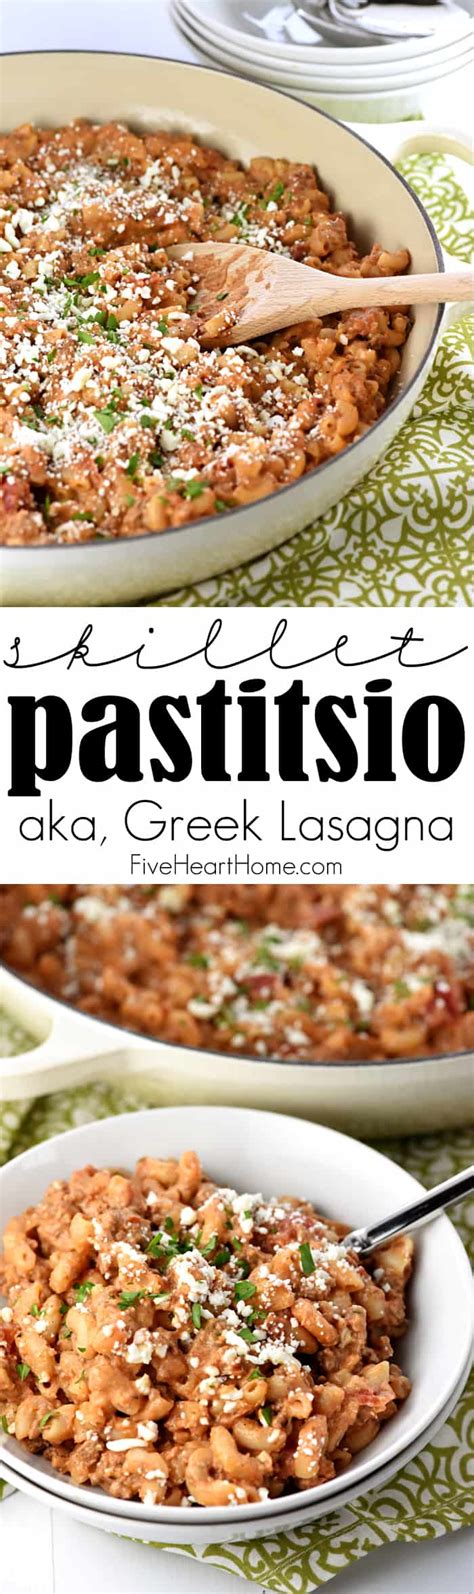 quick-easy-skillet-easy-pastitsio-recipe-30-minute image